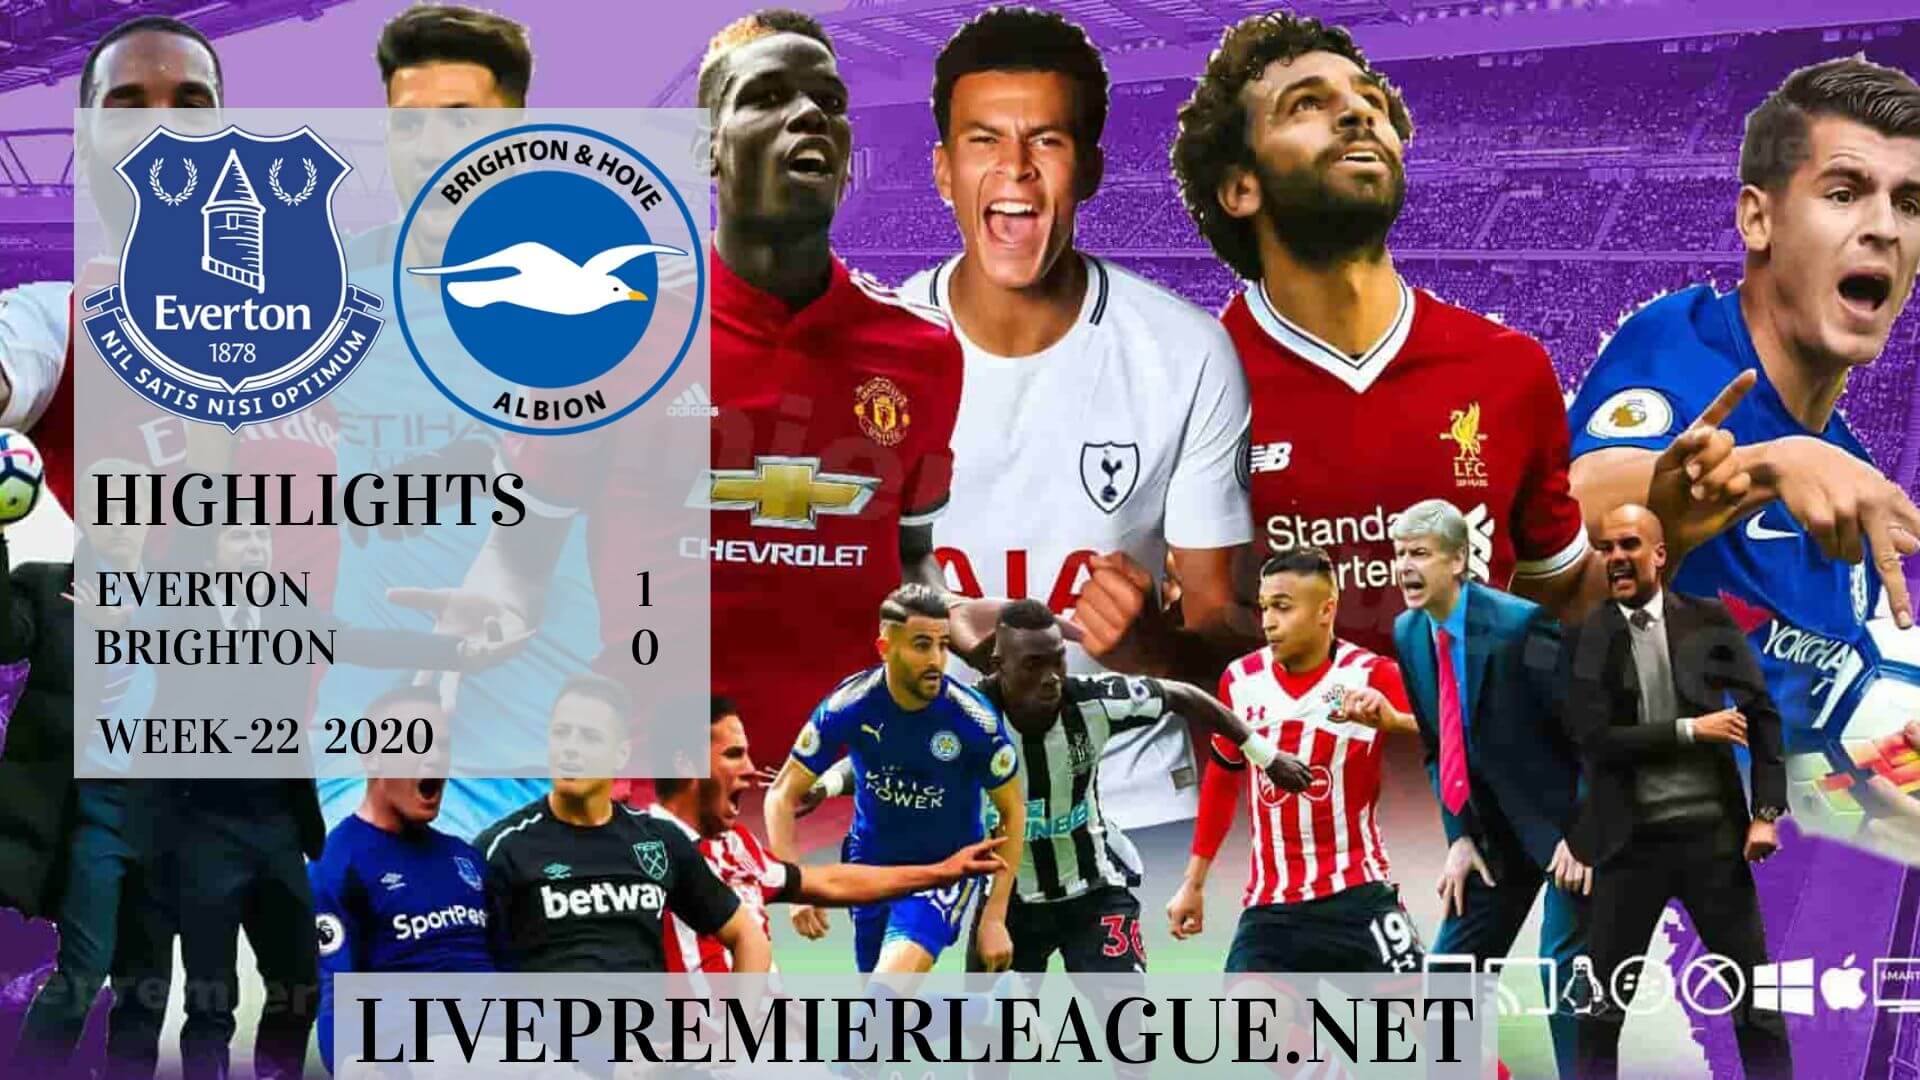 Everton Vs Brighton Highlights 2020 Week 22